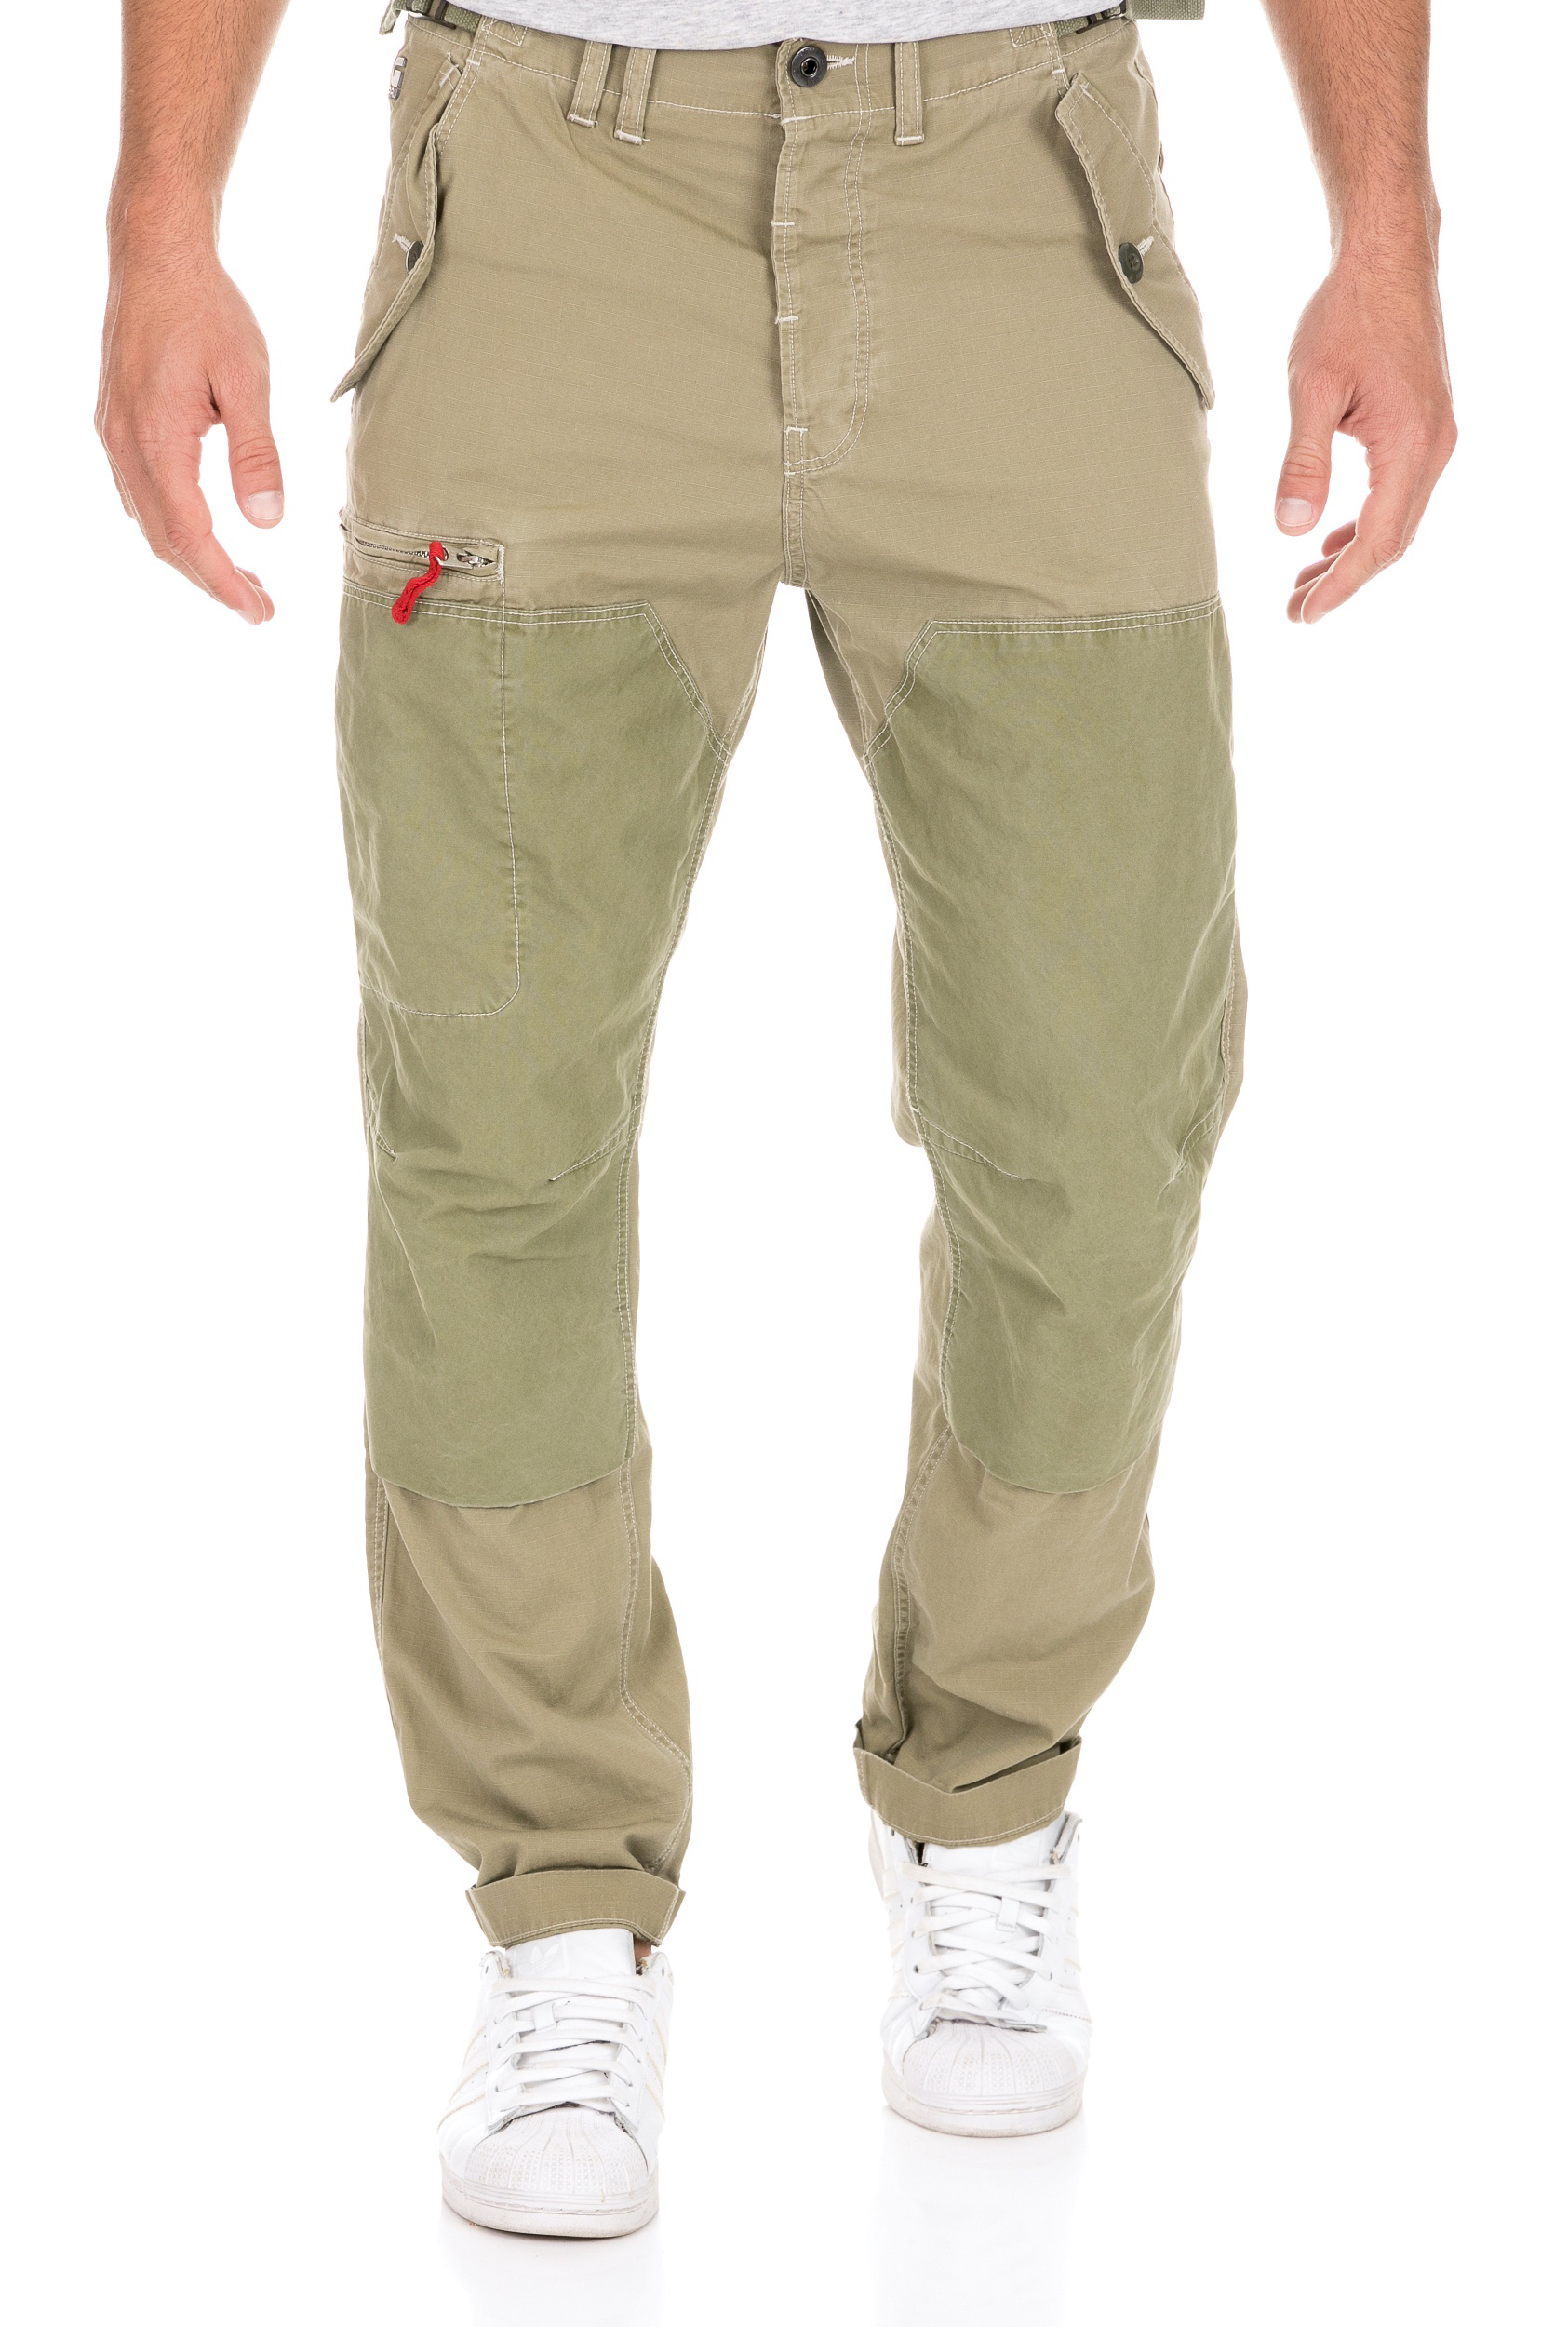 G-STAR - Ανδρικό παντελόνι G-STAR TORBIN χακί Ανδρικά/Ρούχα/Παντελόνια/Cargo